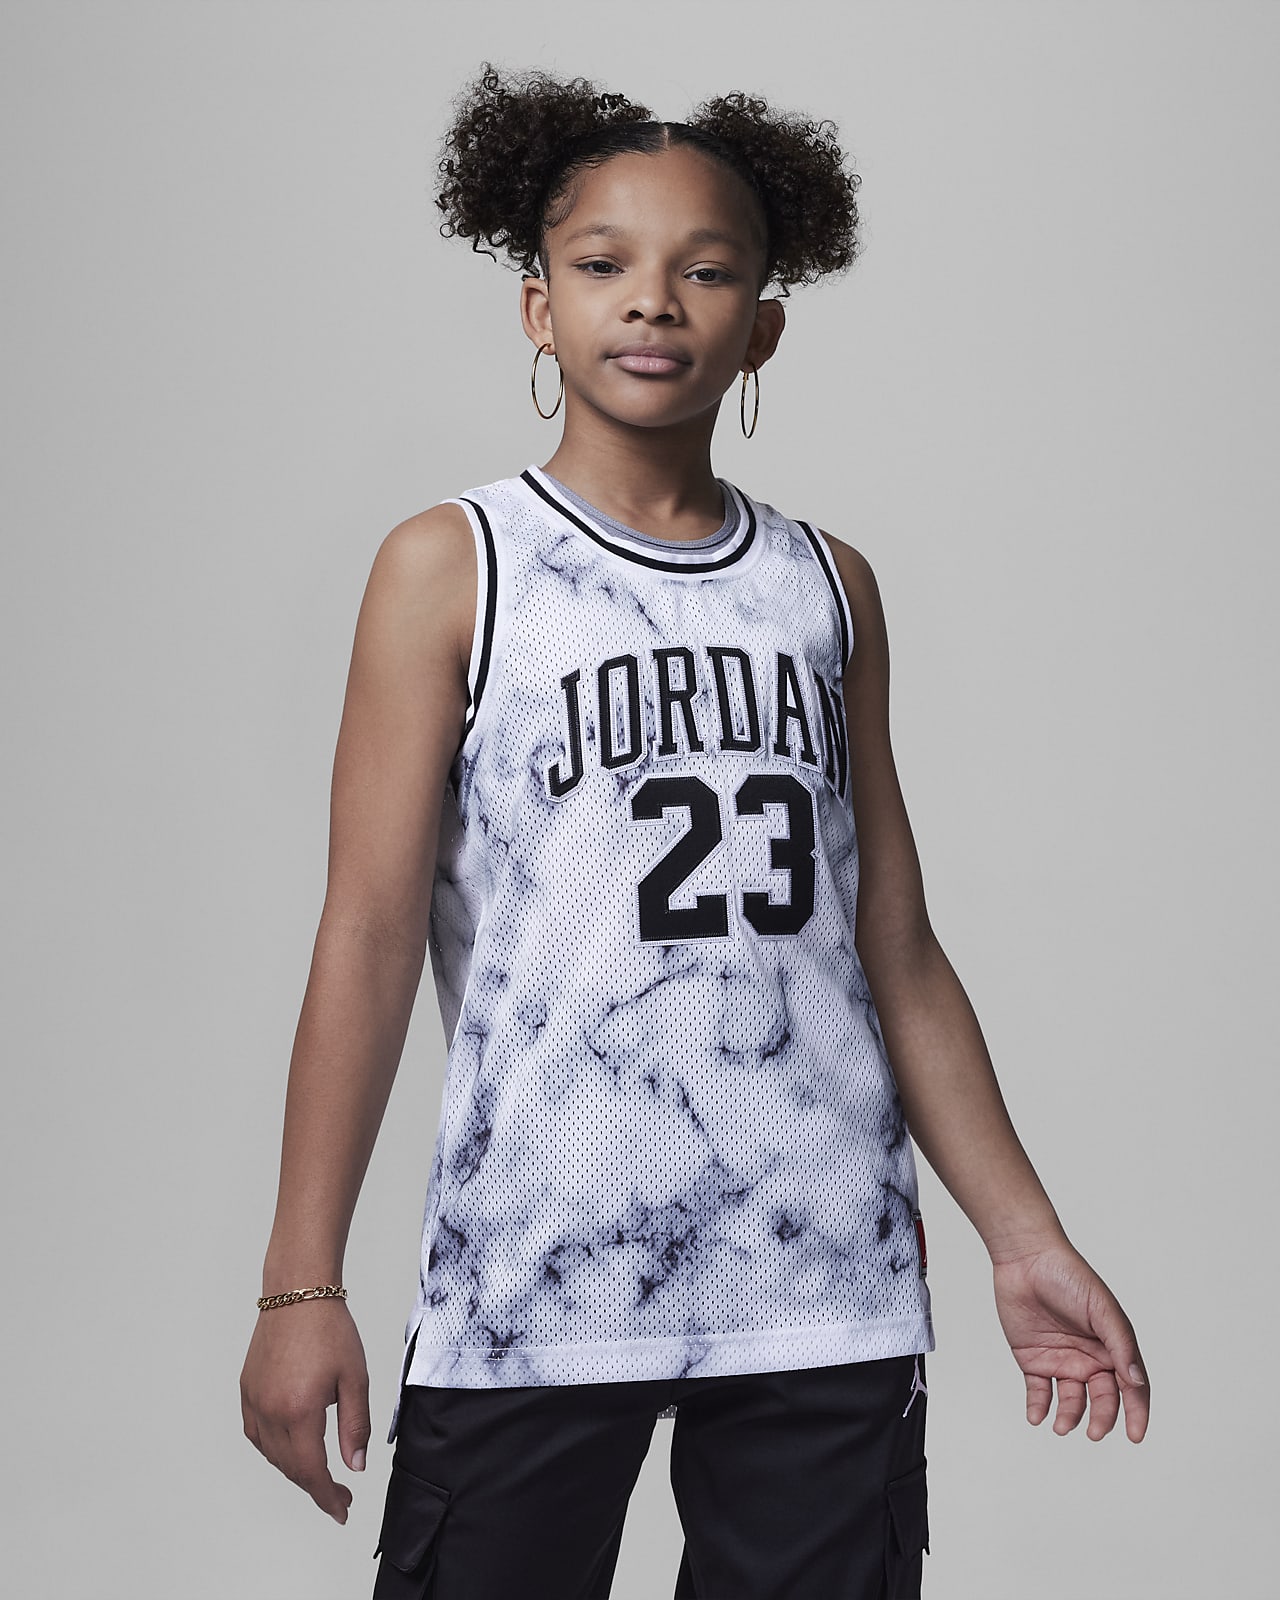 Jordan 23 Striped Jersey Big Kids Top